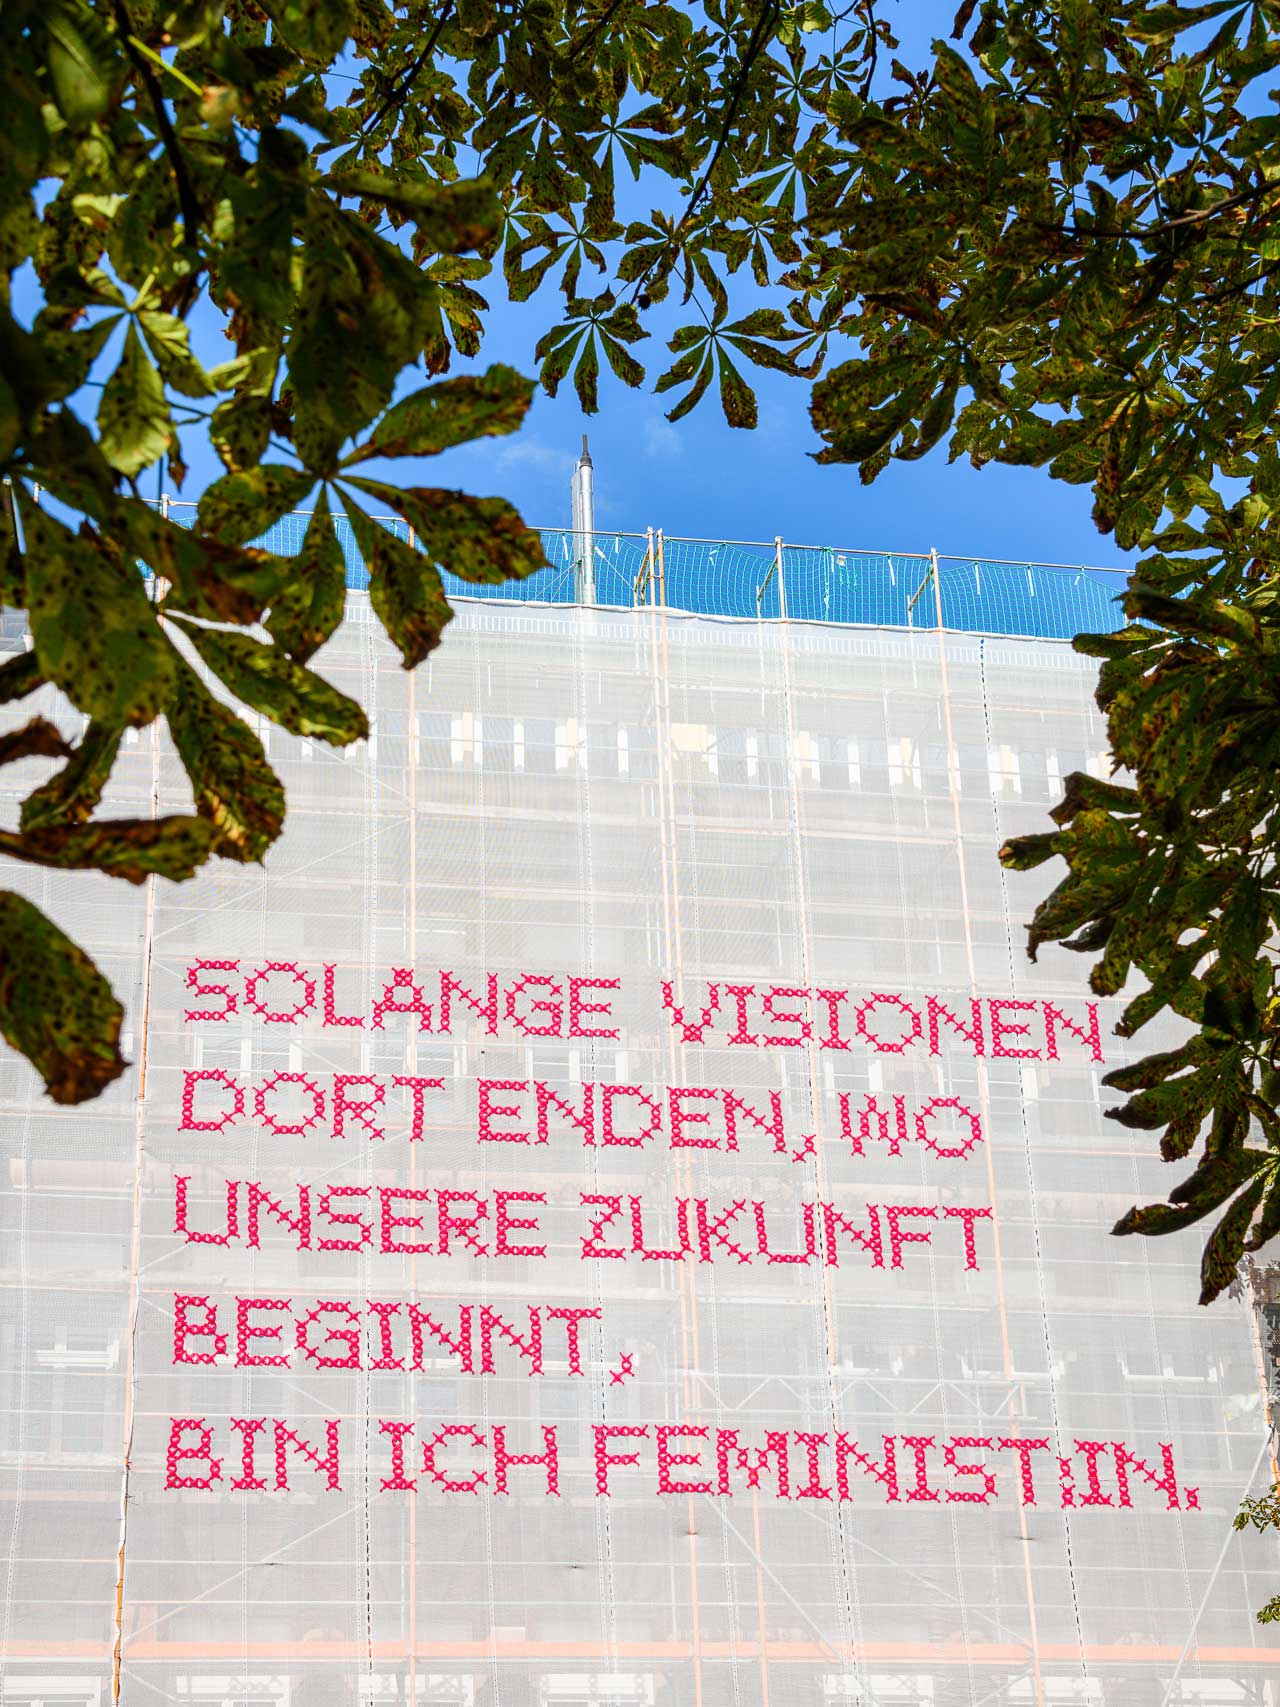 N°22 Goethegymnasium Freiburg im Breisgau, Germany